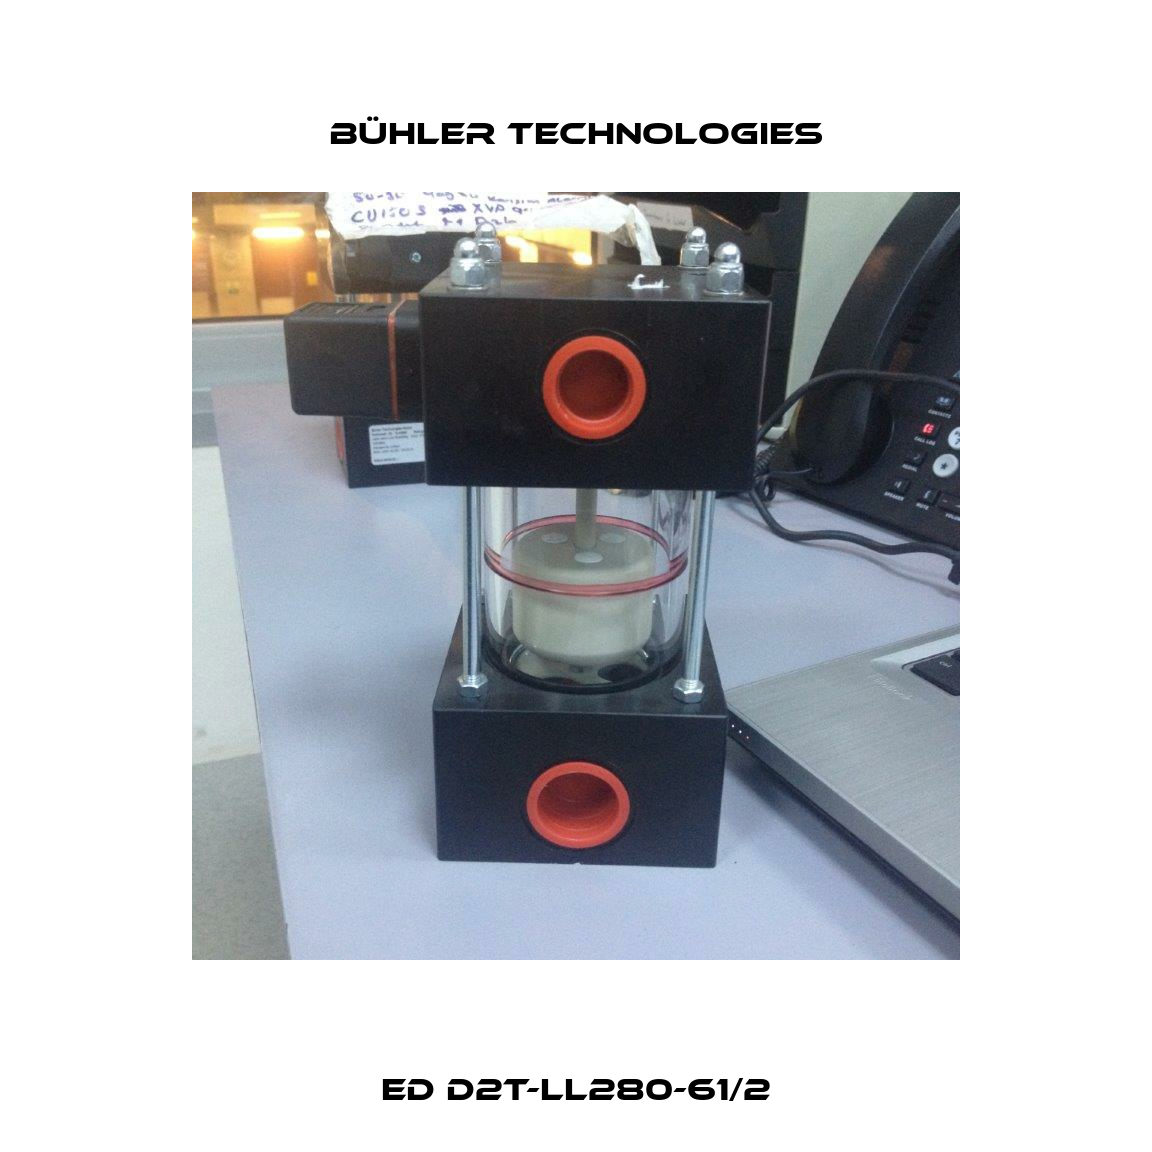 ED D2T-LL280-61/2 Bühler Technologies